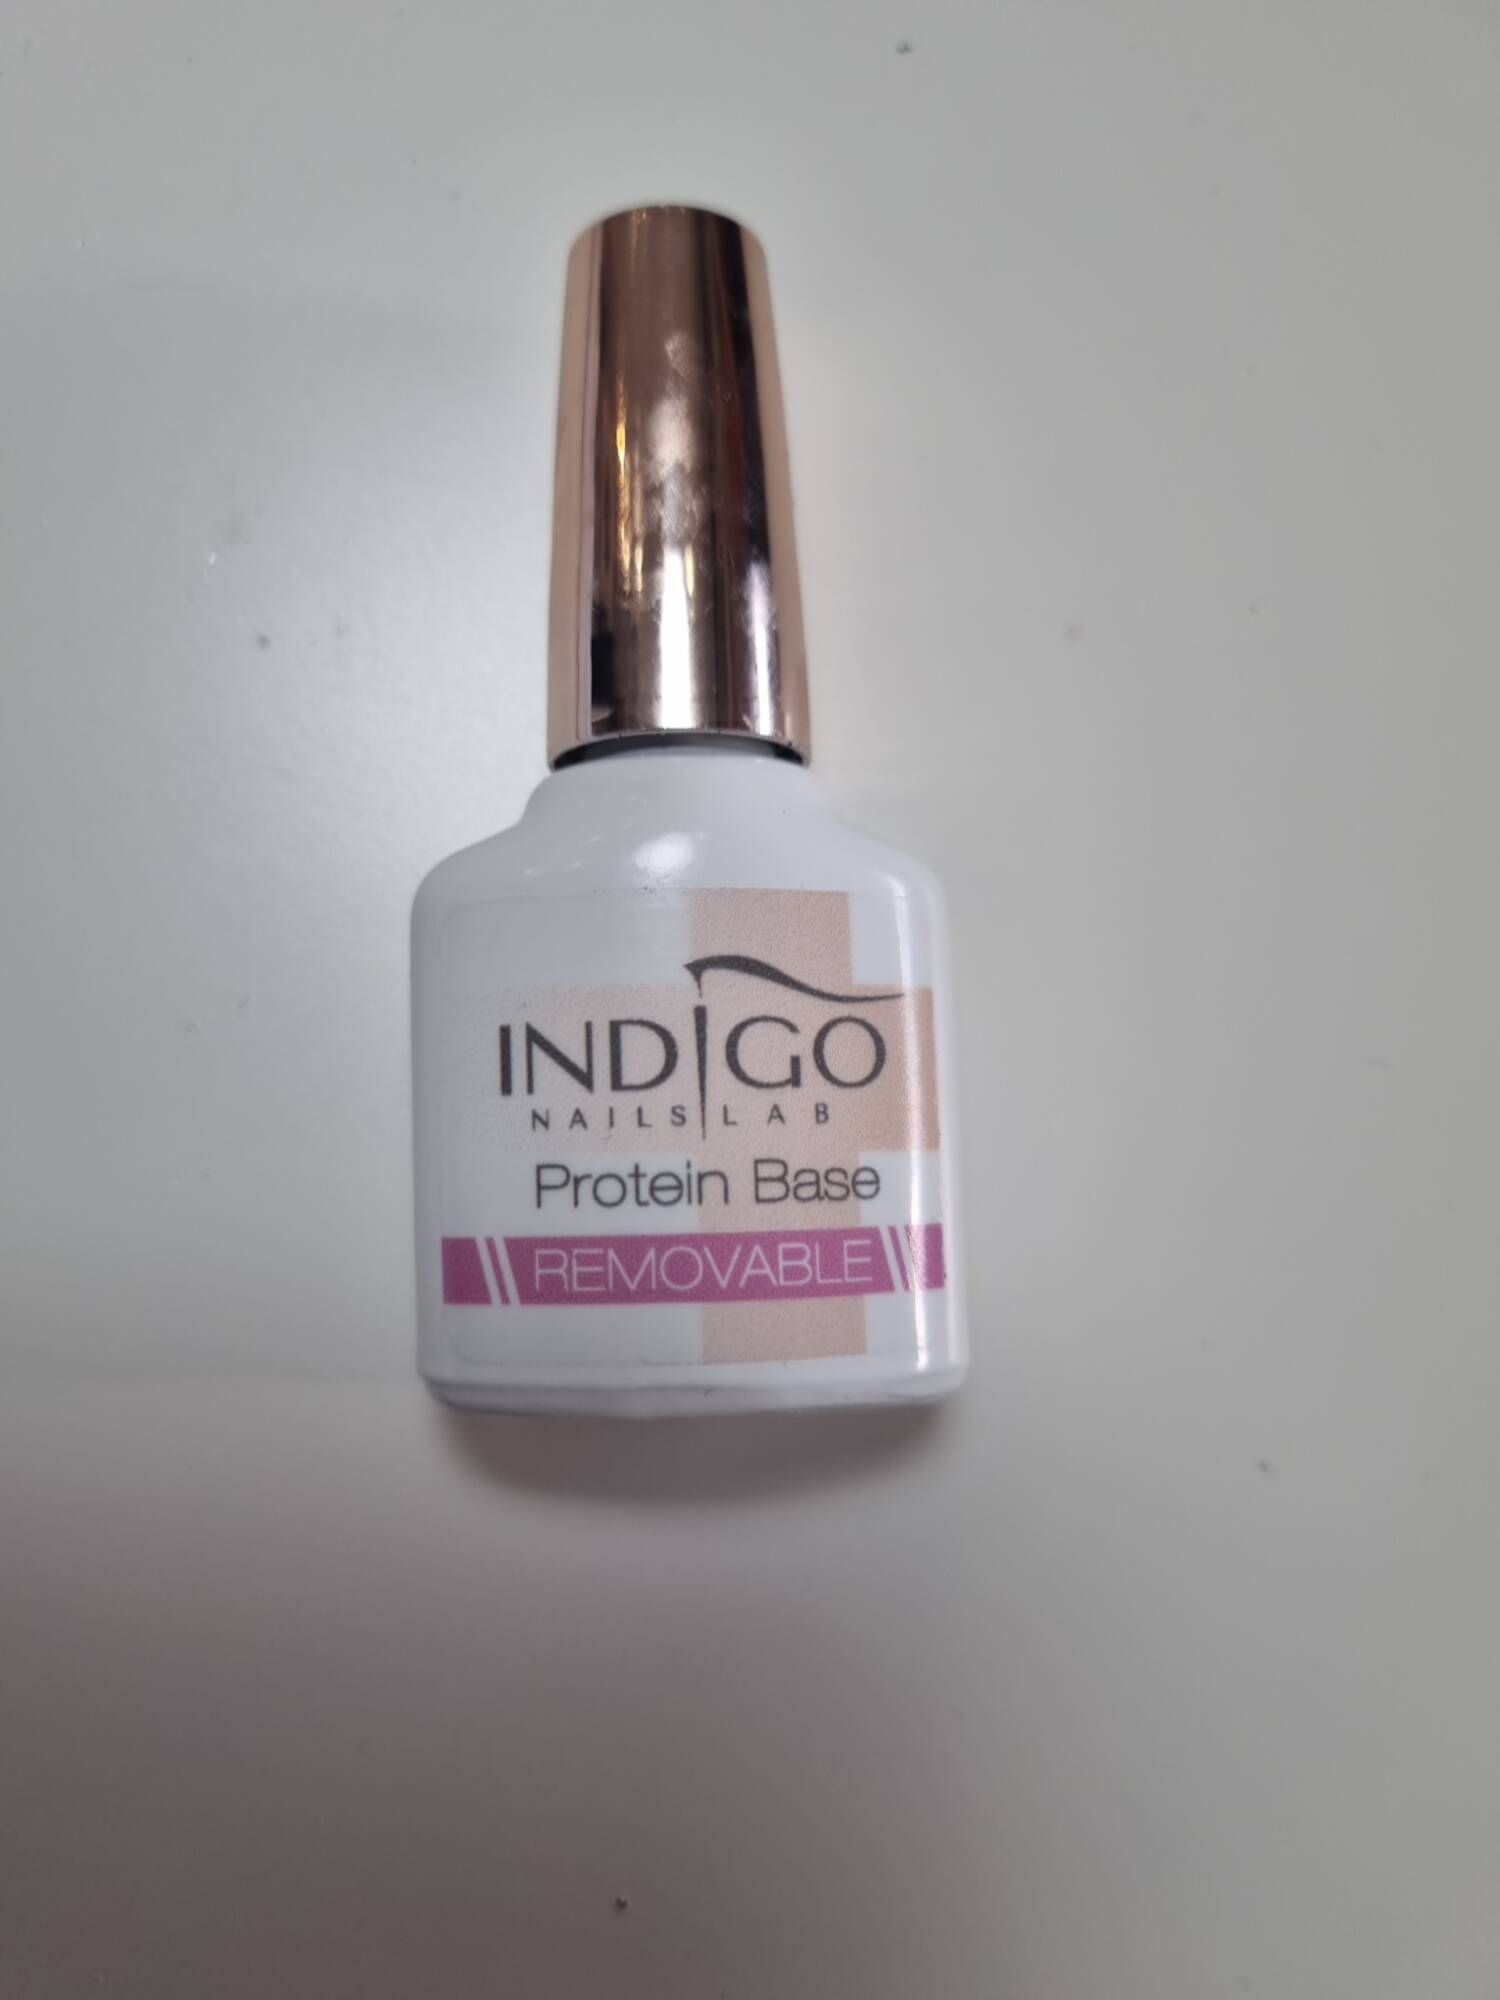 INDIGO NAILS LAB - Protein base removable